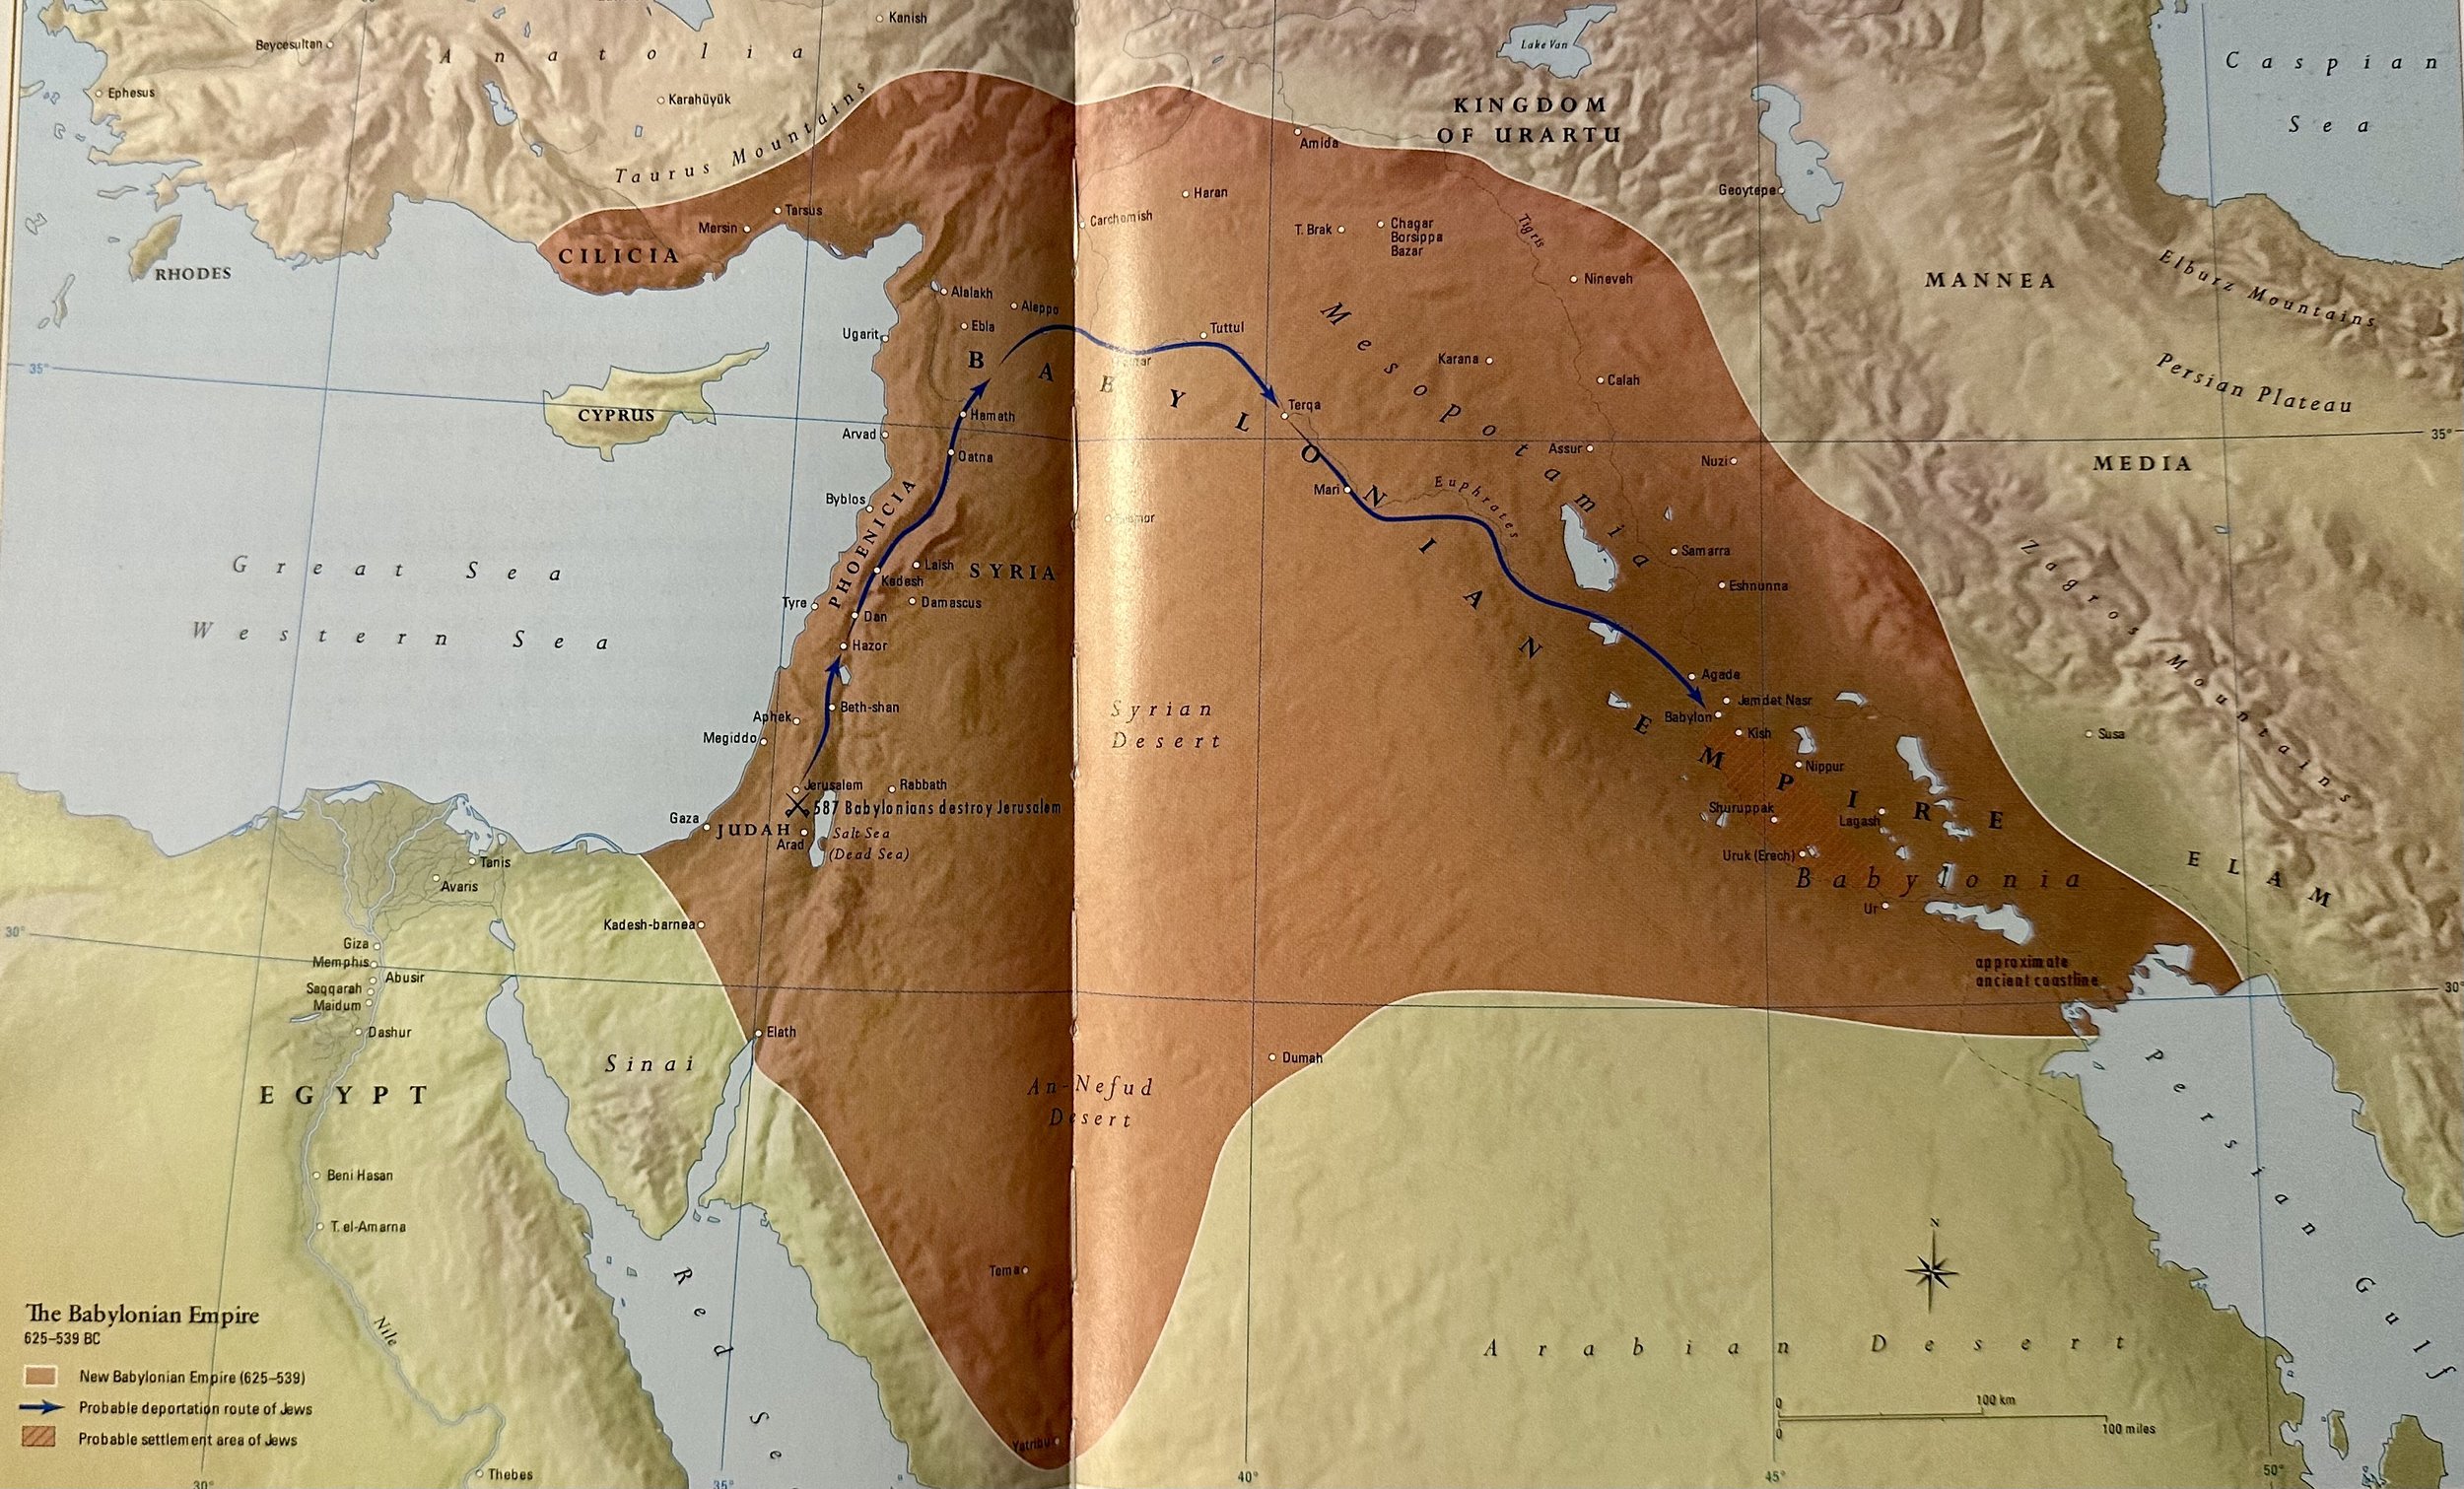 625-539 BCE Babylonian Empire Atlas of the Bible.jpeg